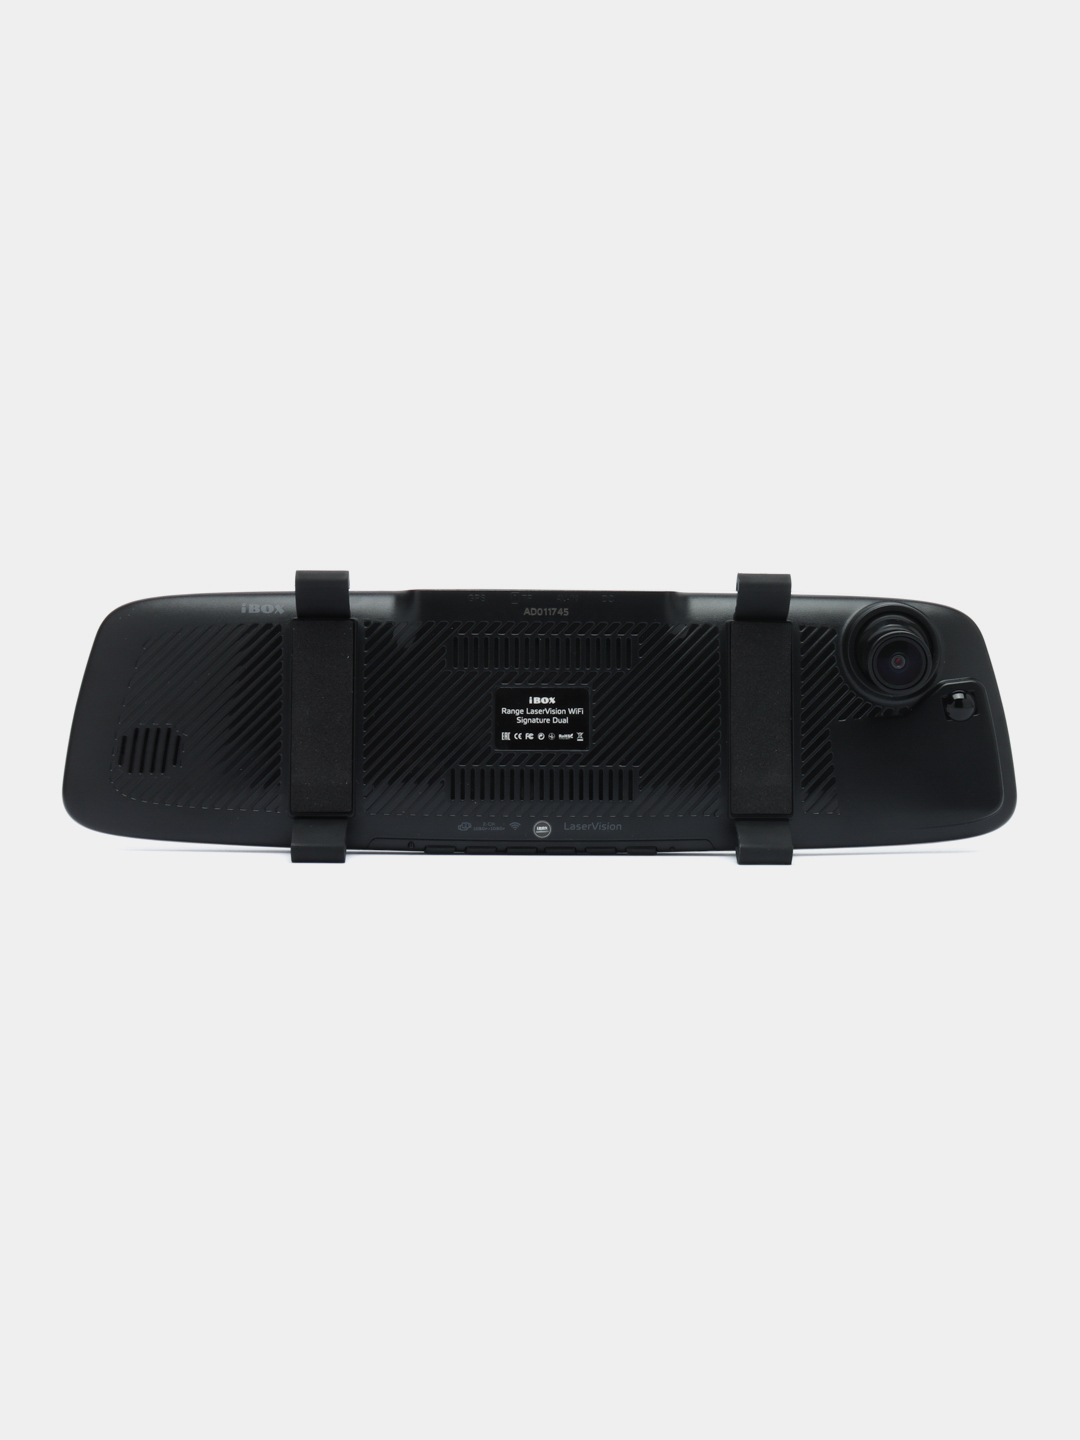 Купить ibox range laservision wifi signature dual